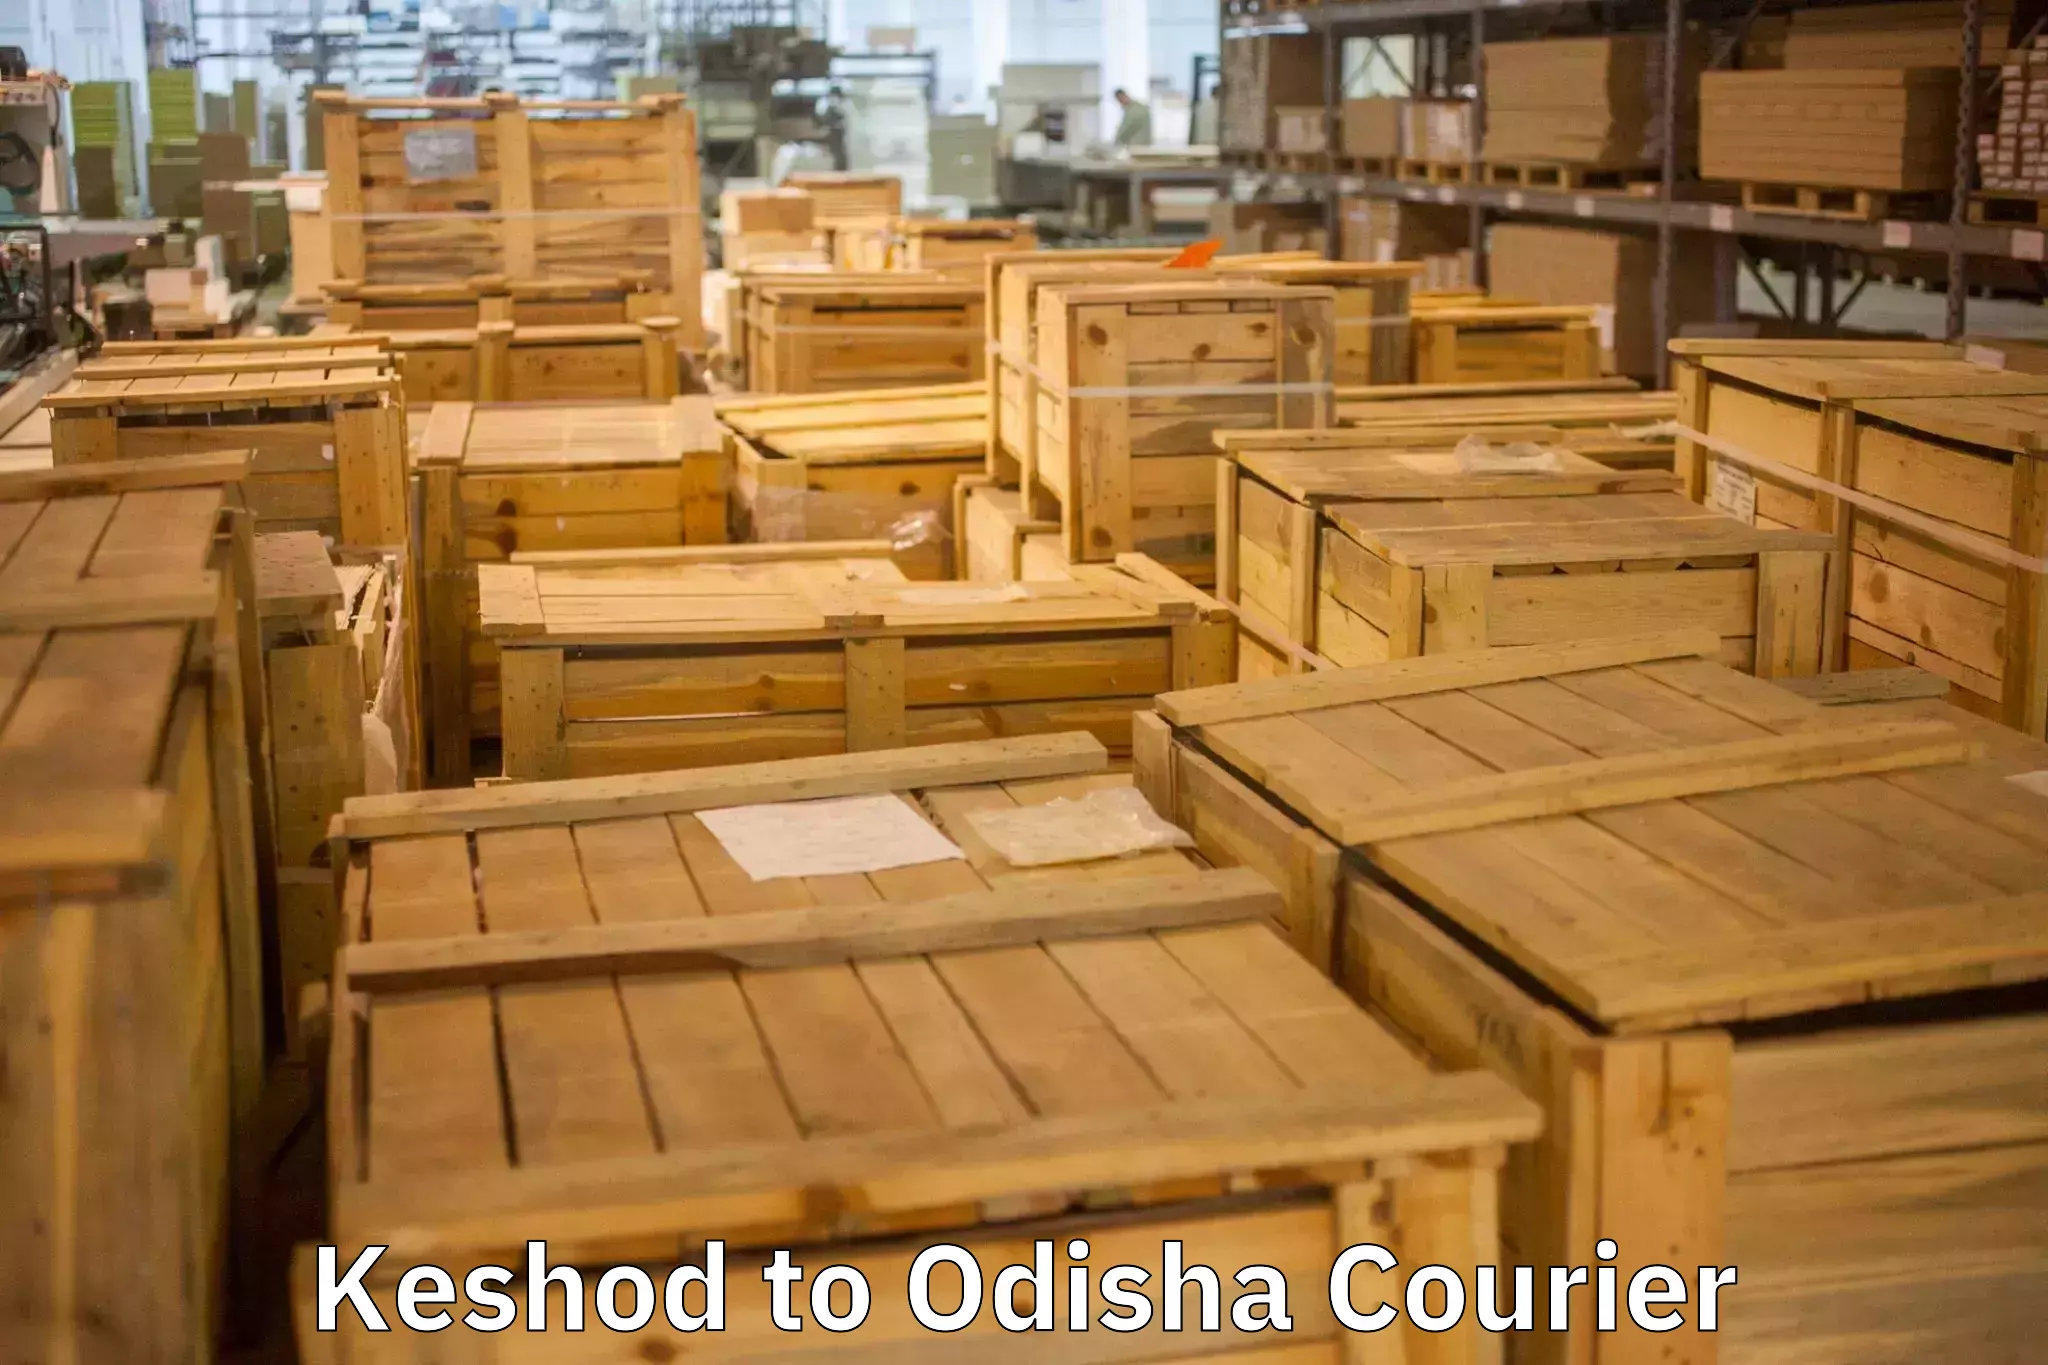 Expert goods movers in Keshod to Ukhunda